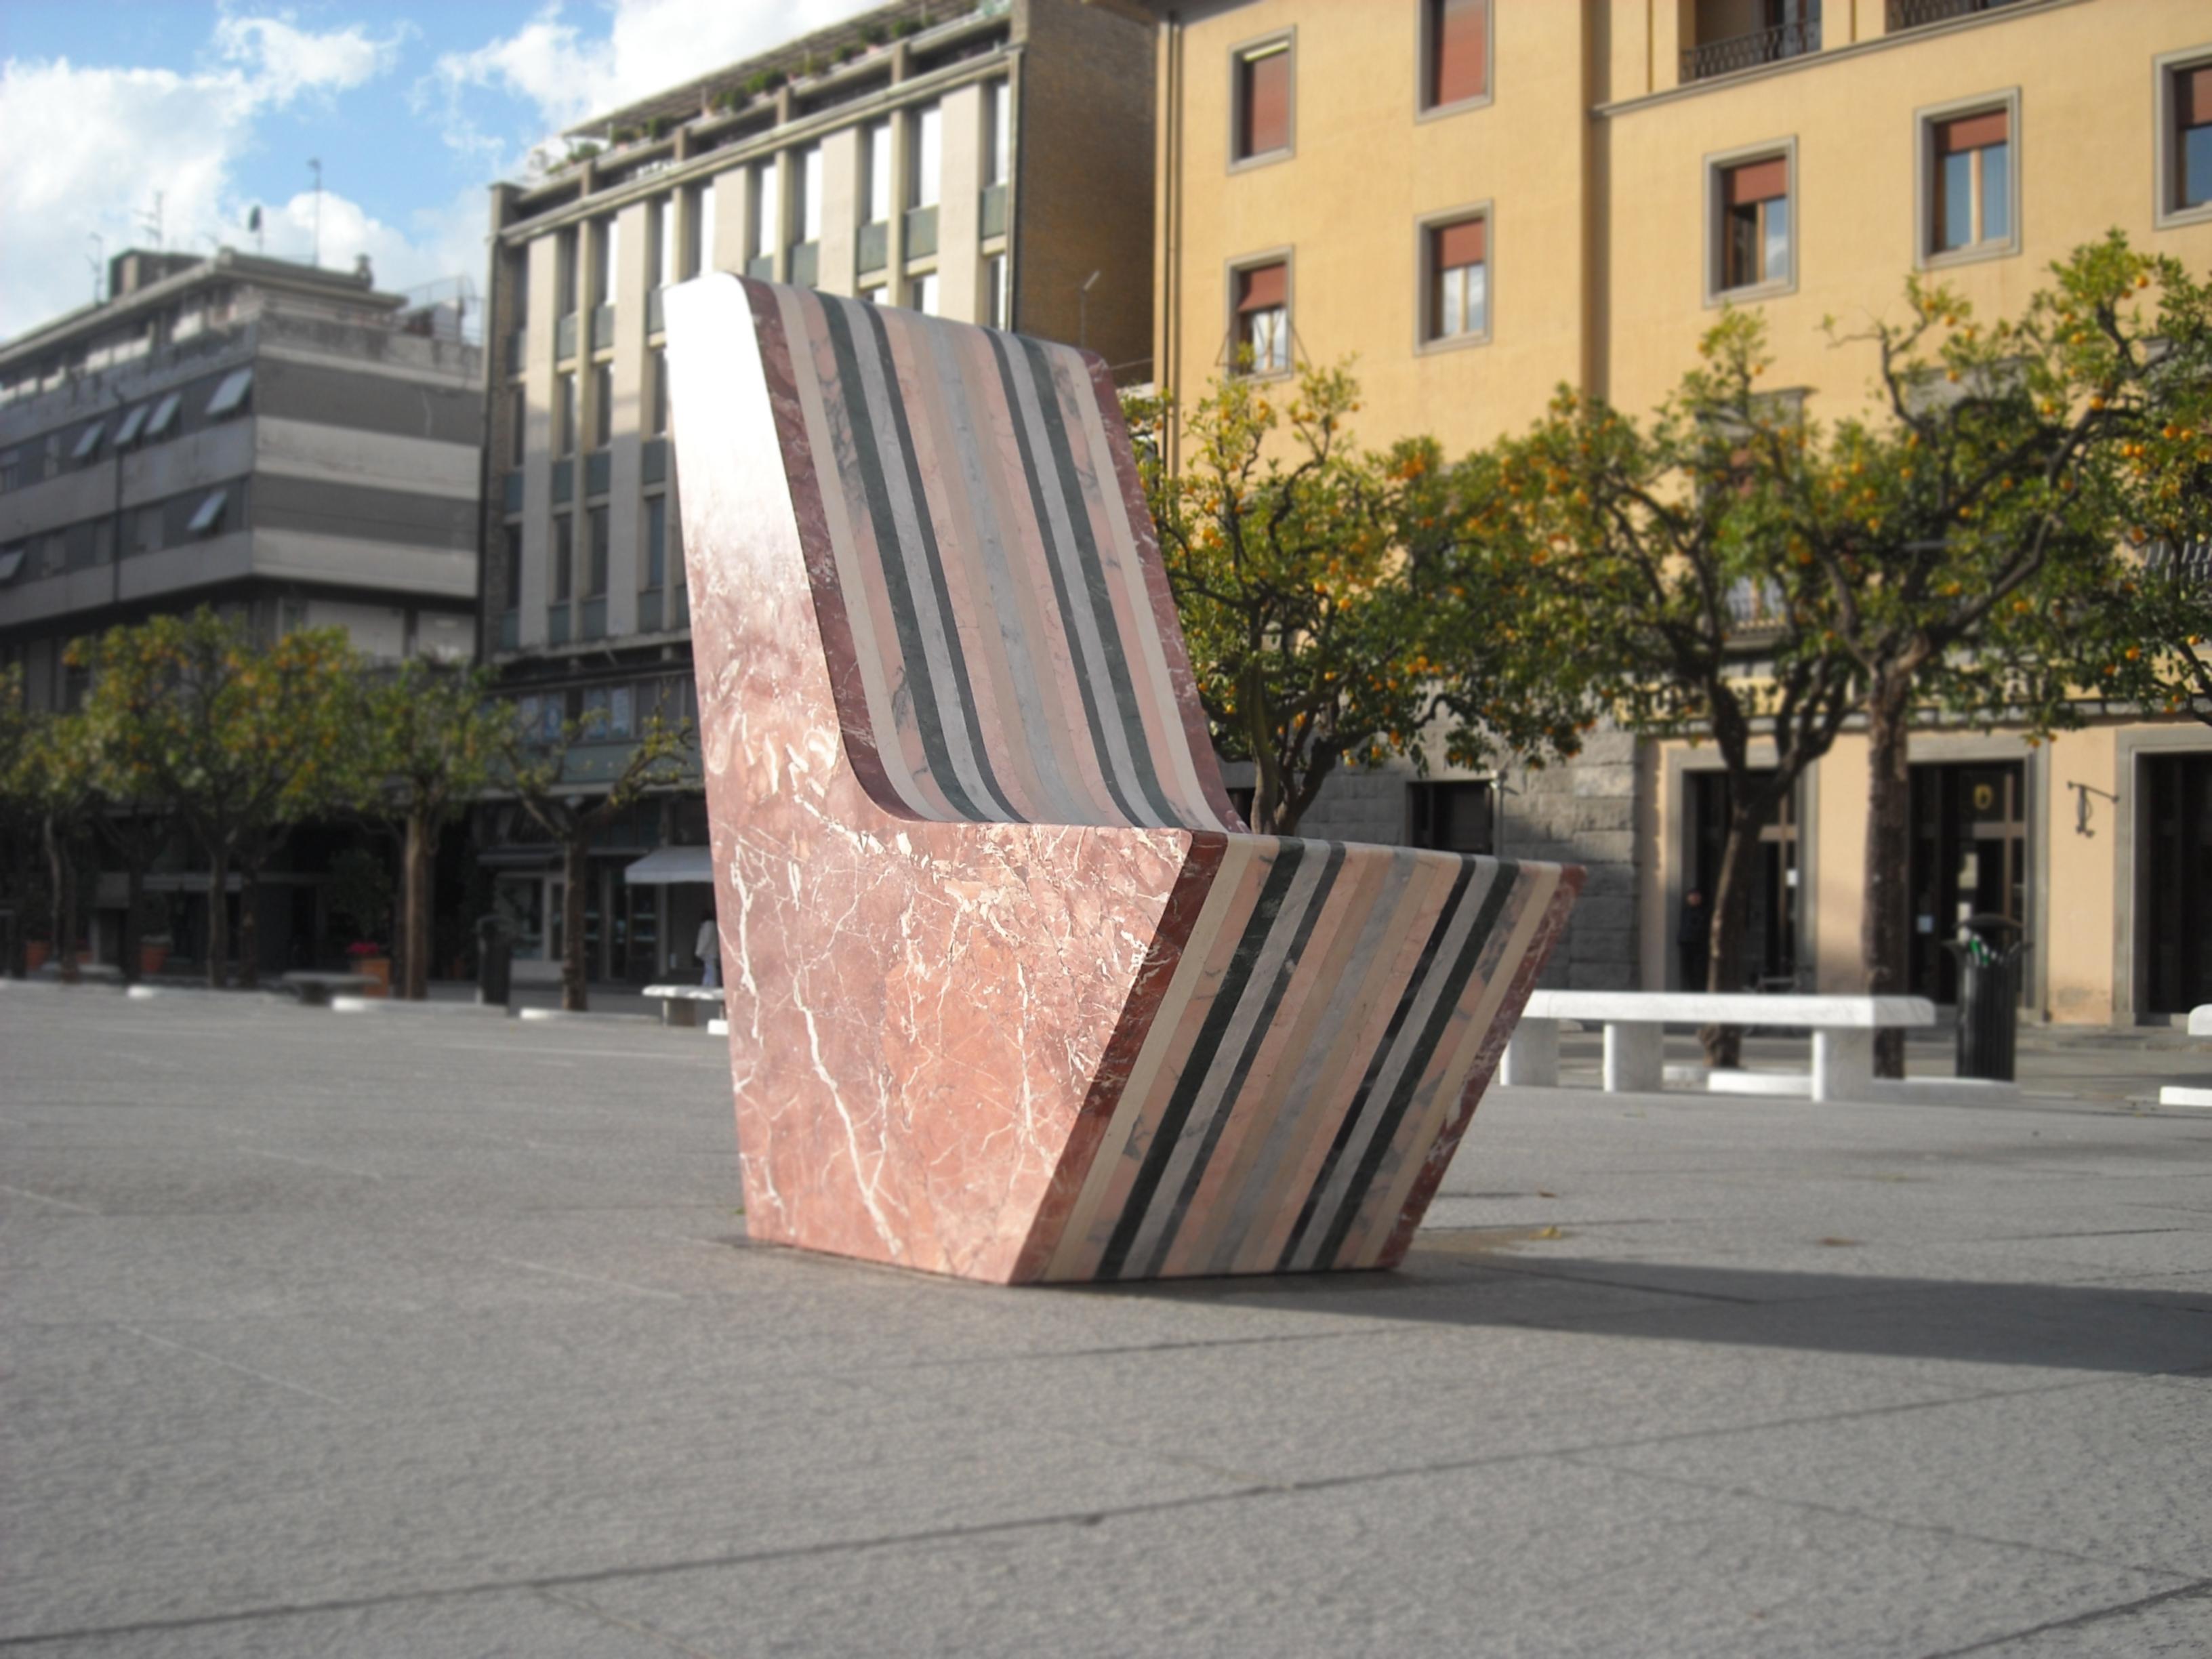 Sitzbank aus recyceltem polichromem Marmor, entworfen von Massimiliano Nocchi - Andrea Giacomo Tazzini

Größe: Bank Klein cm 70 x 50 x 81 H
Materialien: Polichrome Murmeln.
 